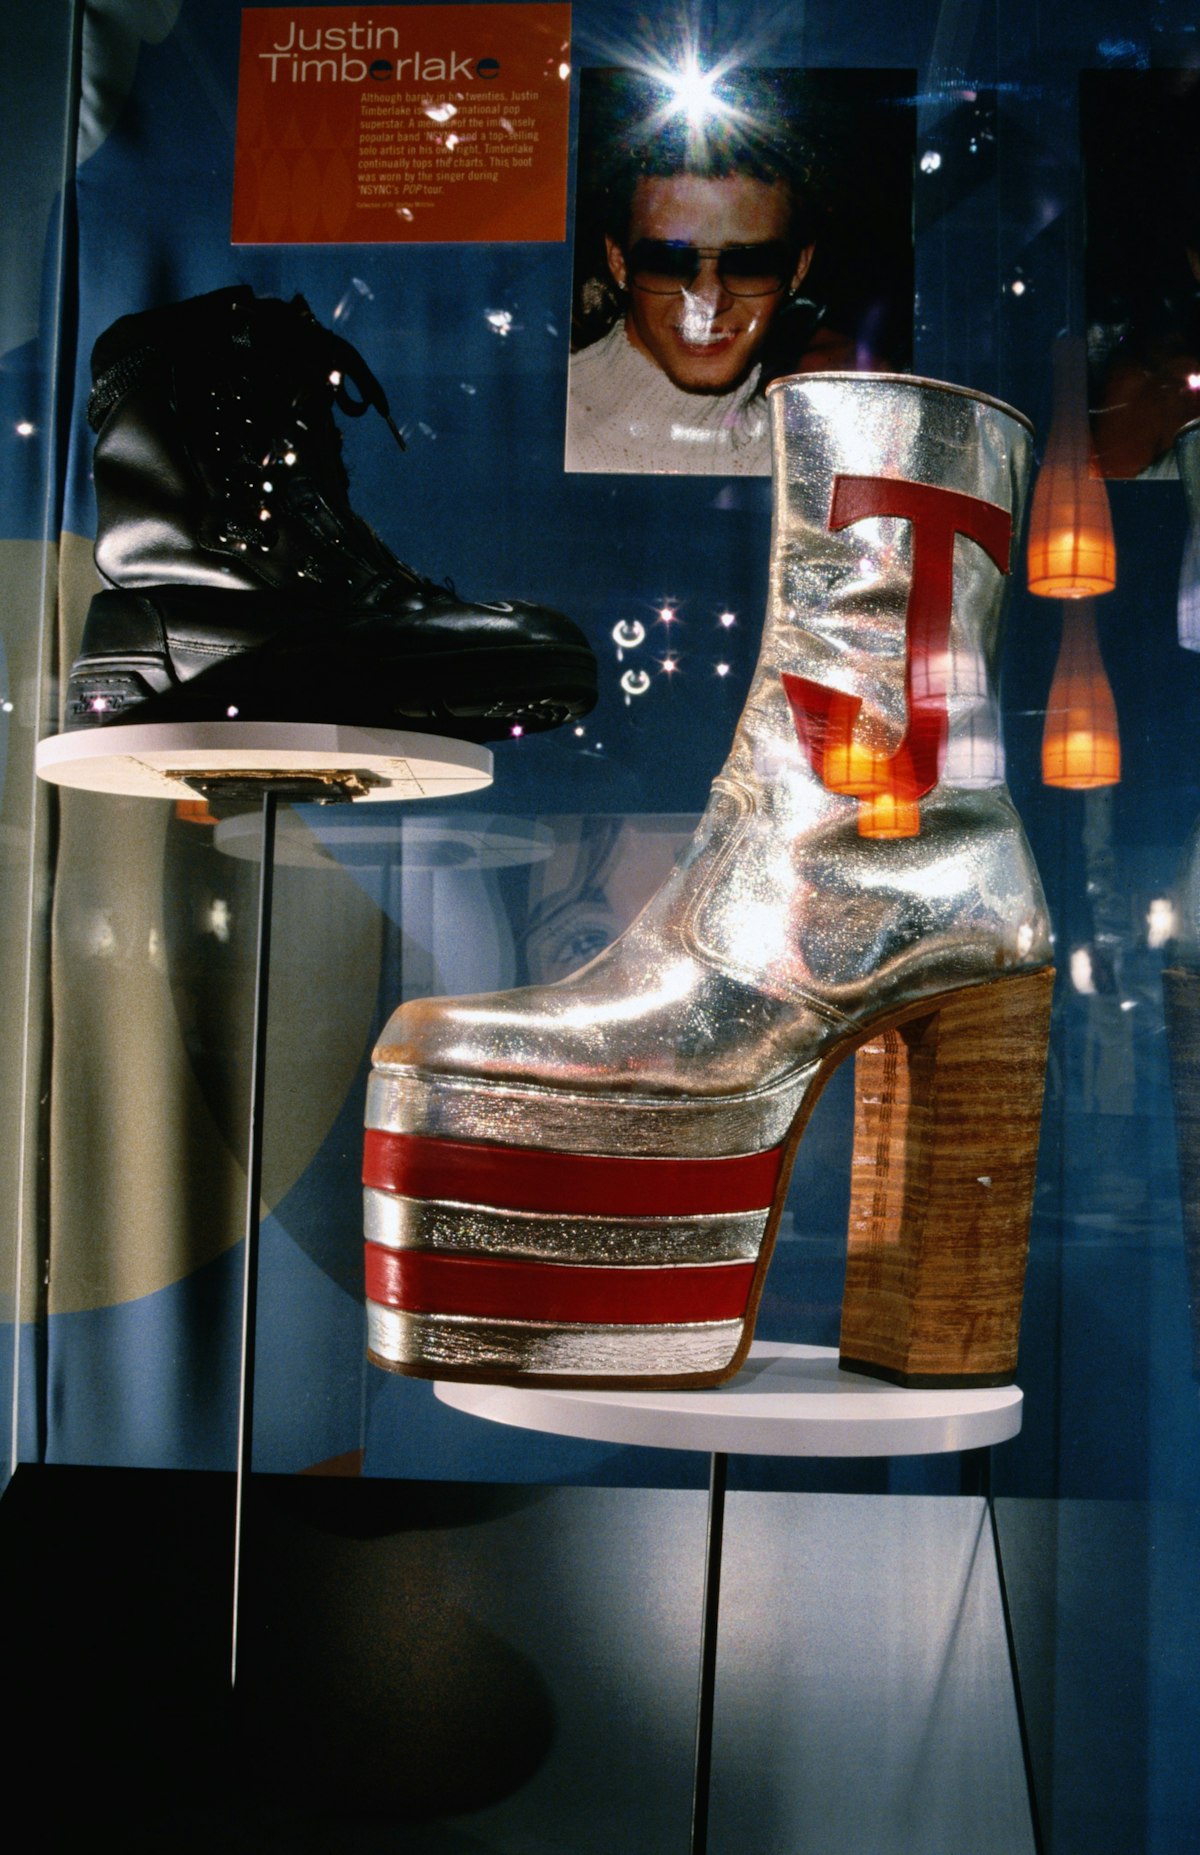 Shoes of Justin Timberlake and Elton John in Bata Shoe Museum.